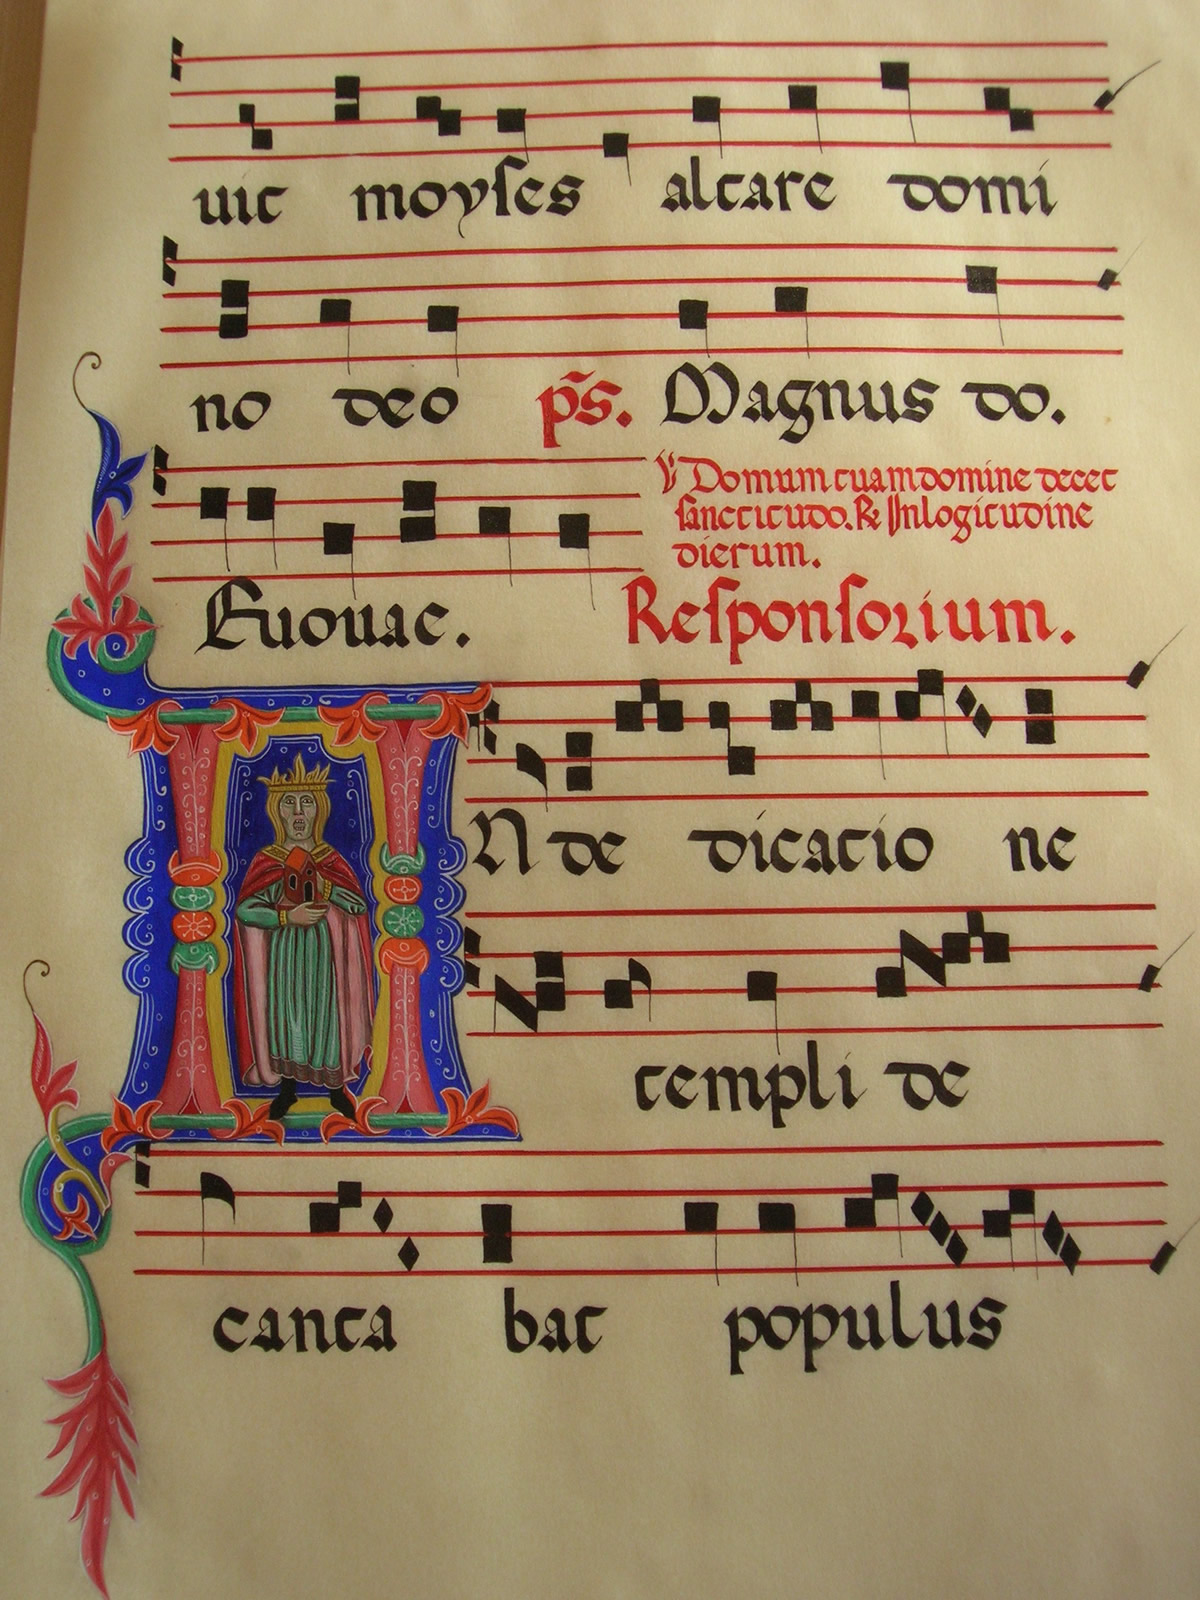 Anthem Book XIII century, cm. 35 x 50, on parchment paper.